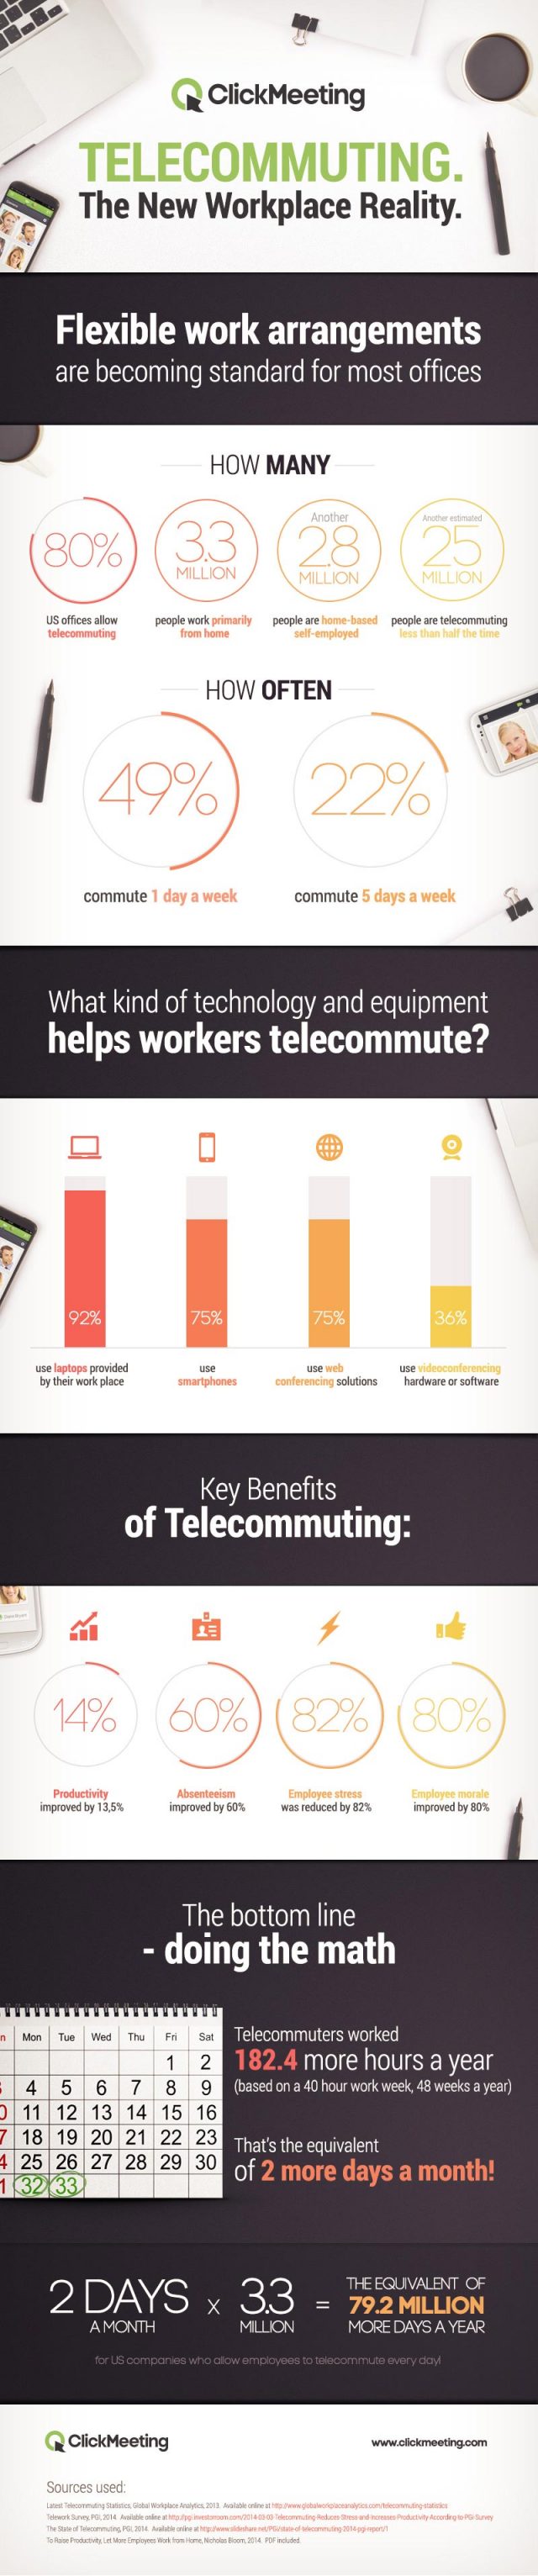 Telecommuting the New Workplace Reality